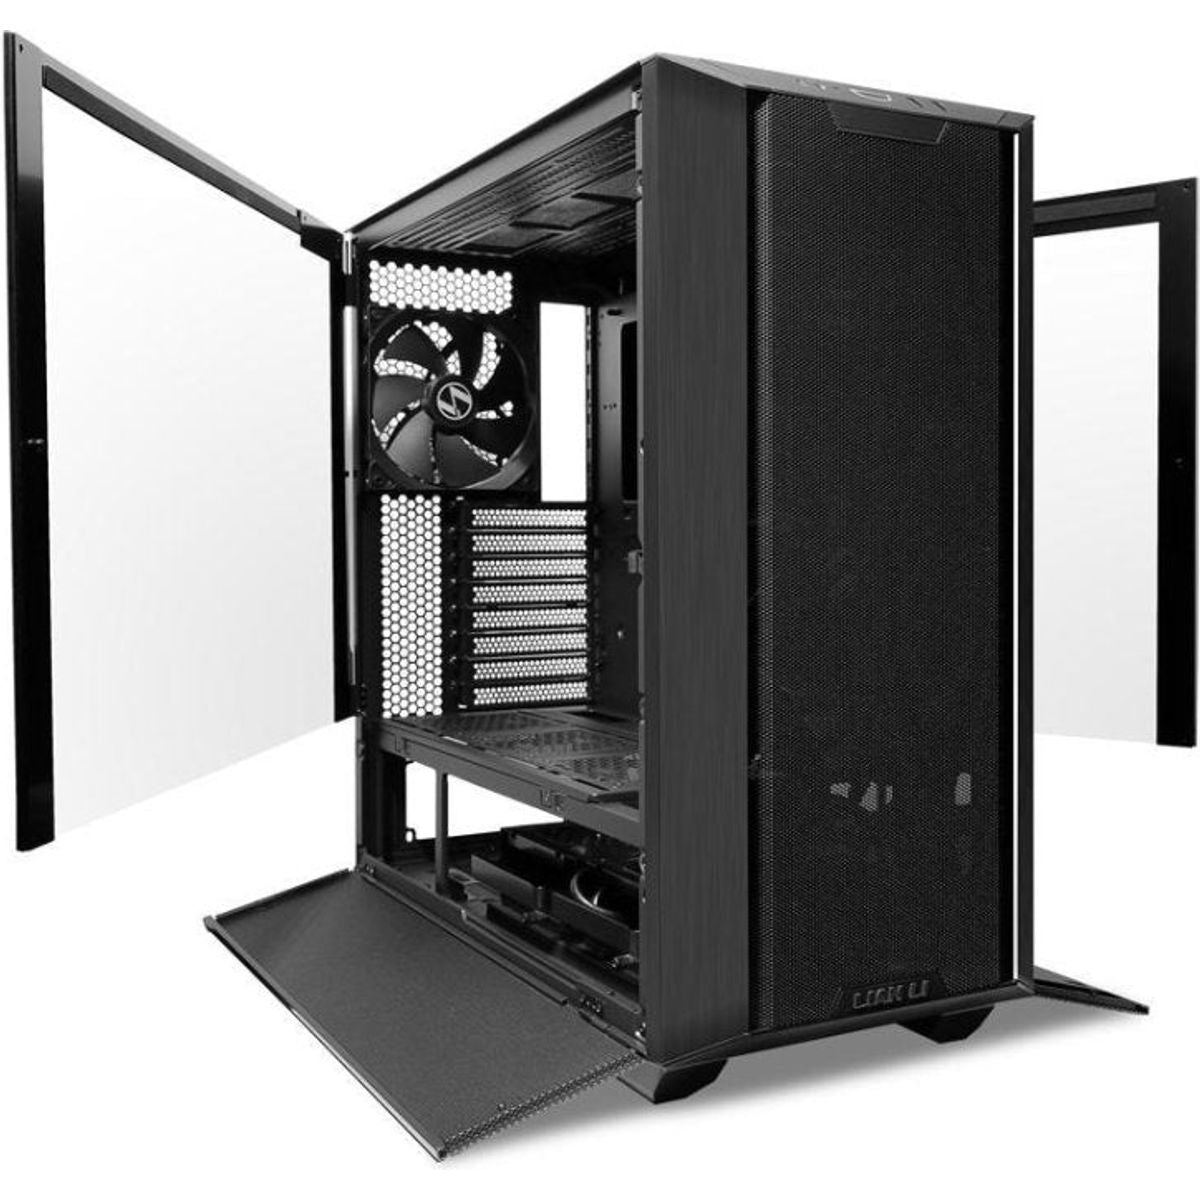 LIAN LI Lancool III BLACK Mid Tower ATX Computer Case - Desktop Computer & Server Cases - Gamertech.shop